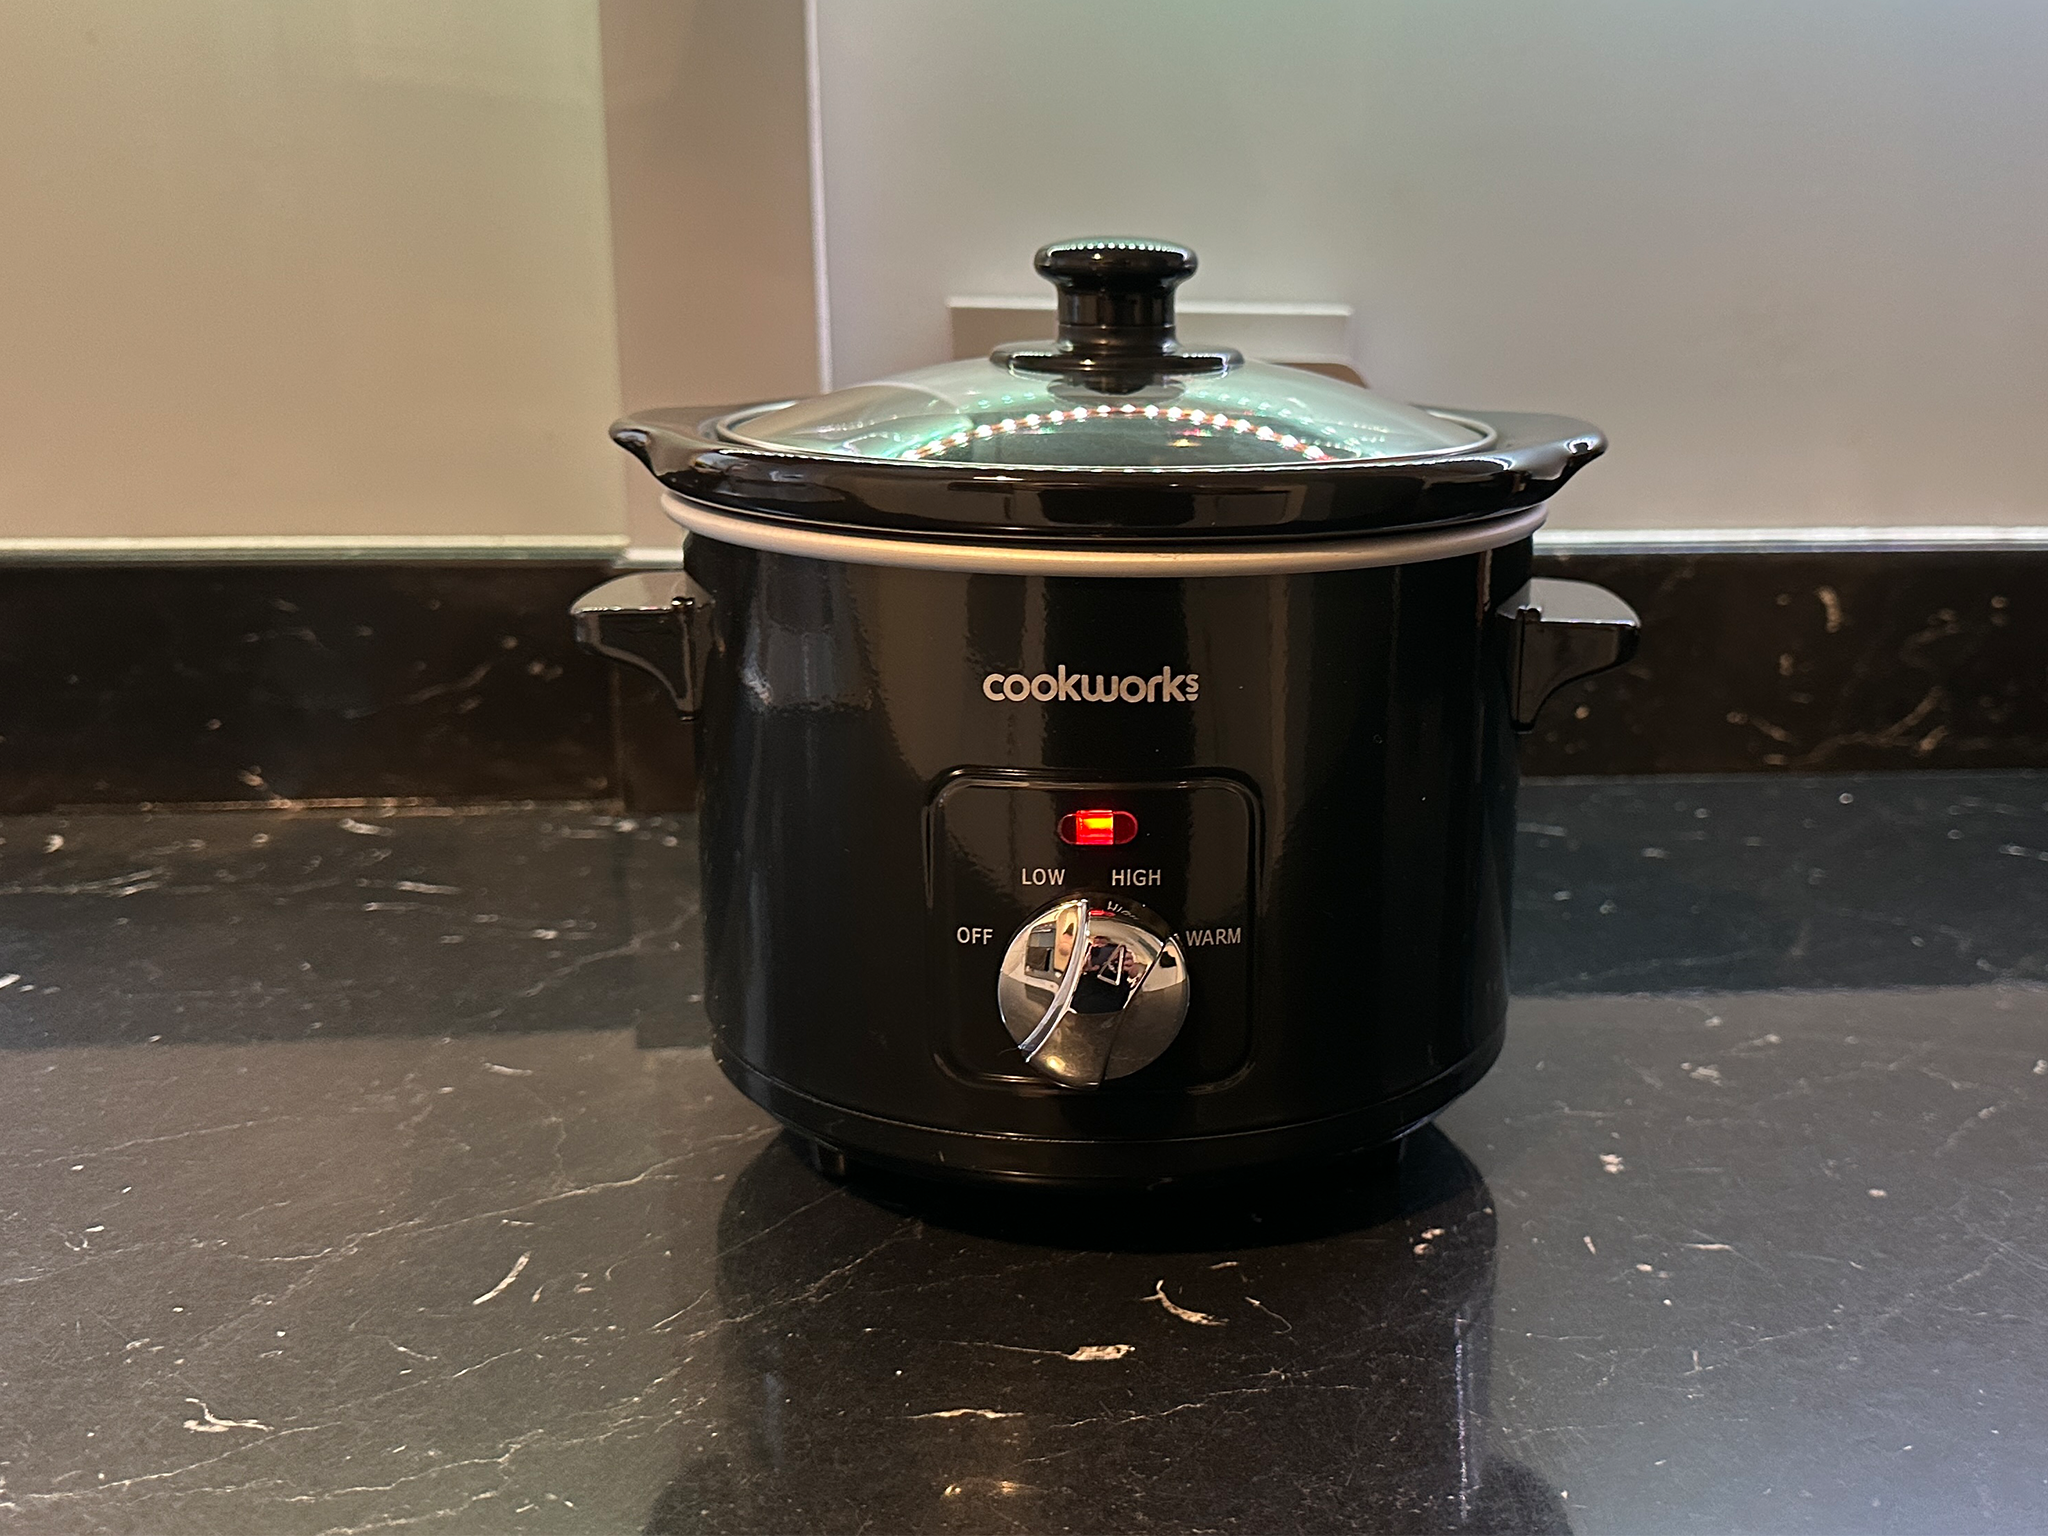 Cookworks 1.5l compact slow cooker